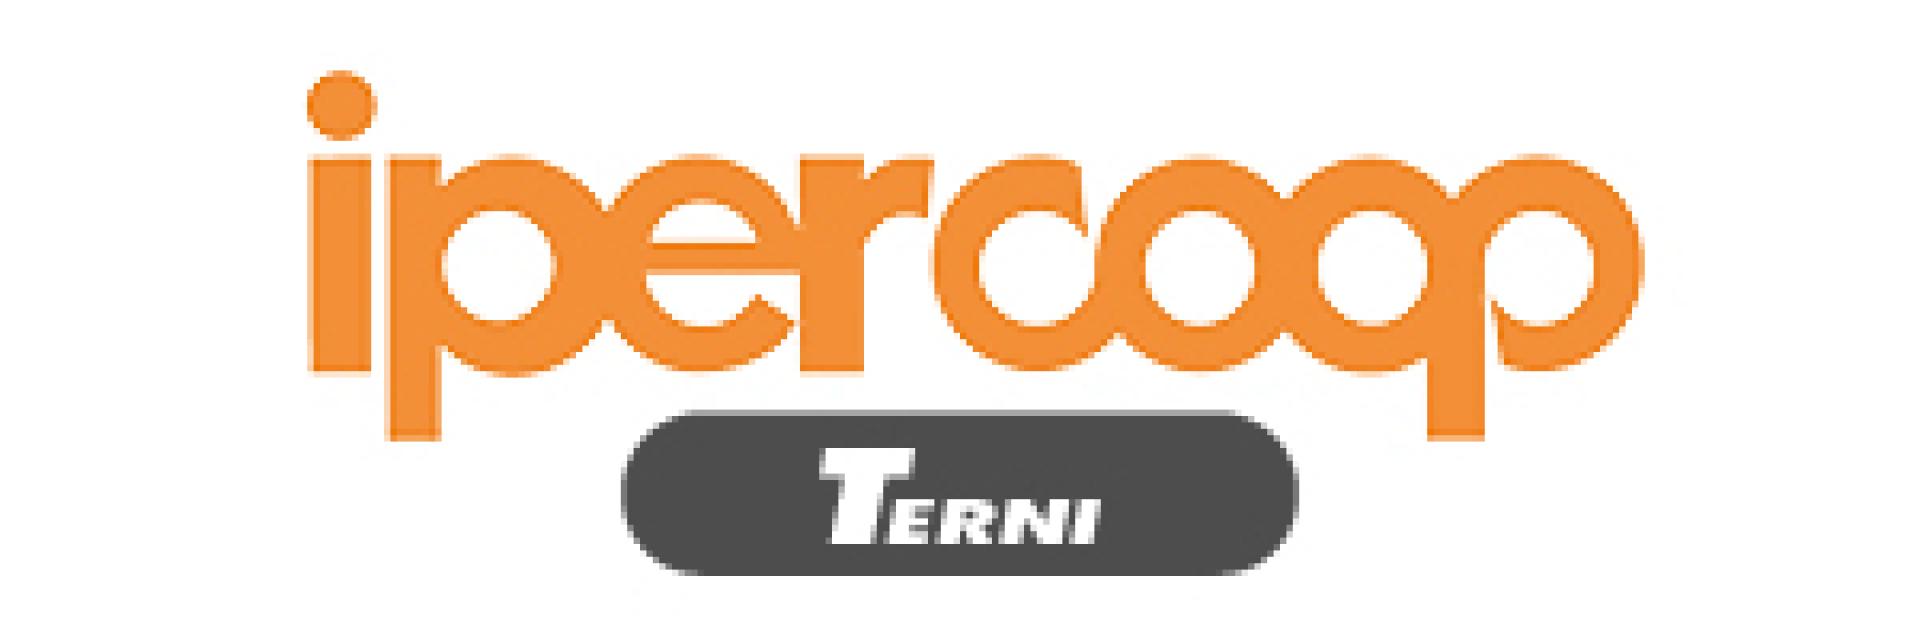 Ipercoop Terni